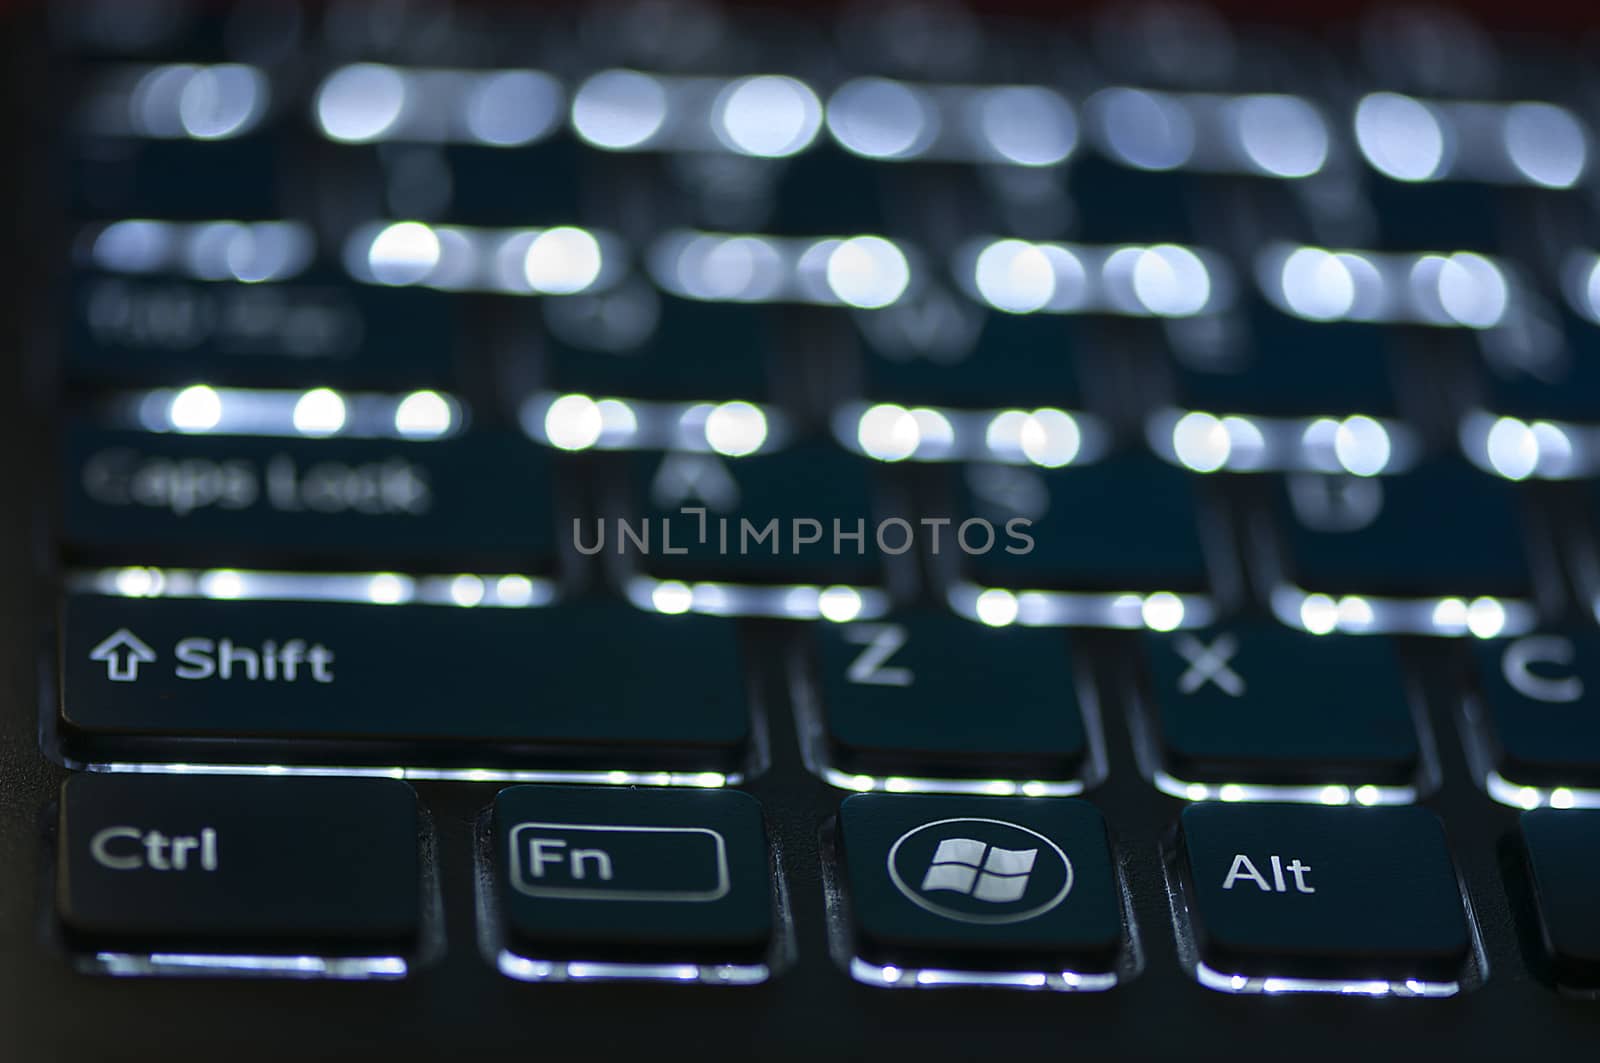 Illuminated keyboard. Focus on Ctrl Fn Alt keys by remusrigo